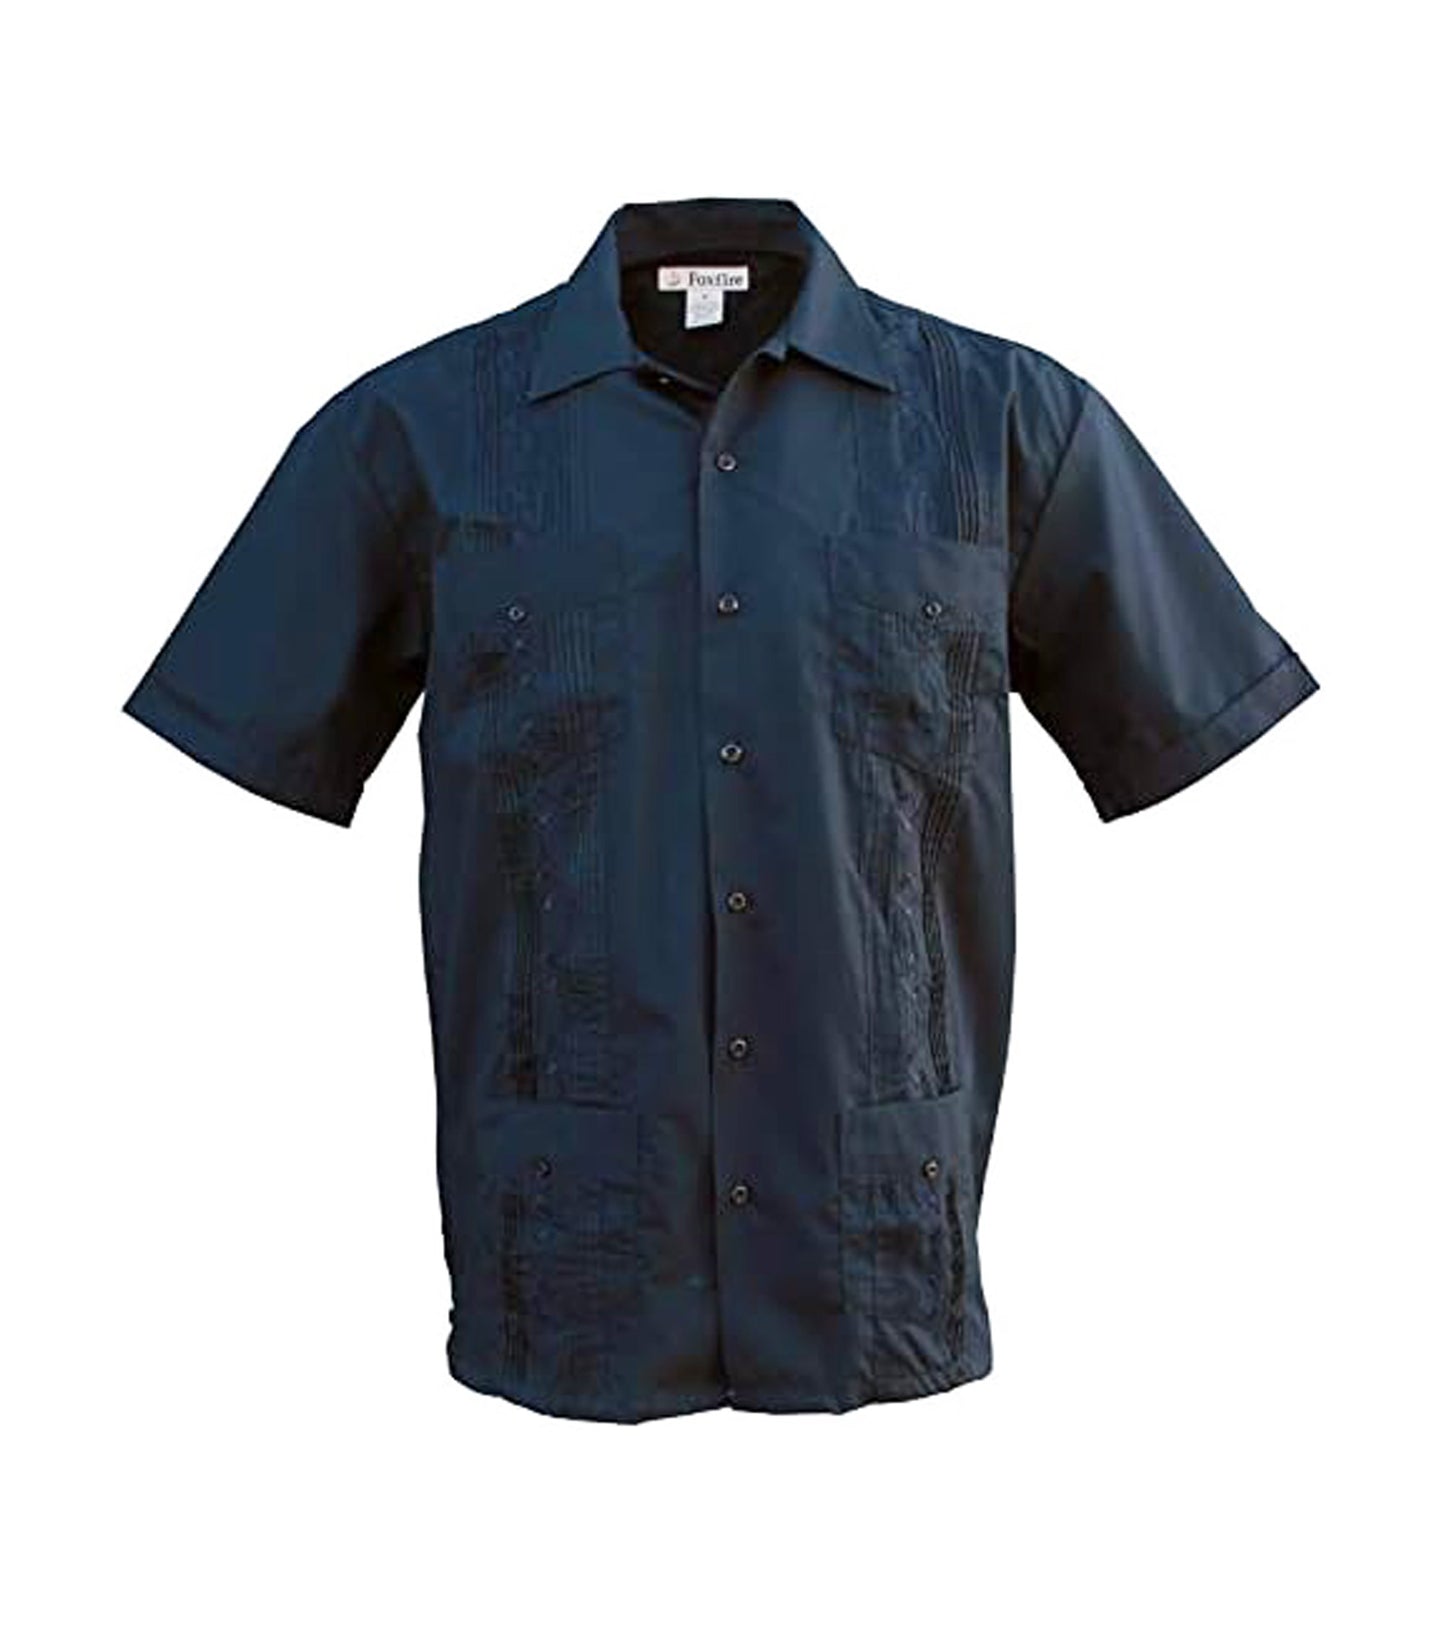 X FOXFIRE Sportswear Men's Short Sleeved Embroidered 4-Pocket Guayabera Shirt, Style#321